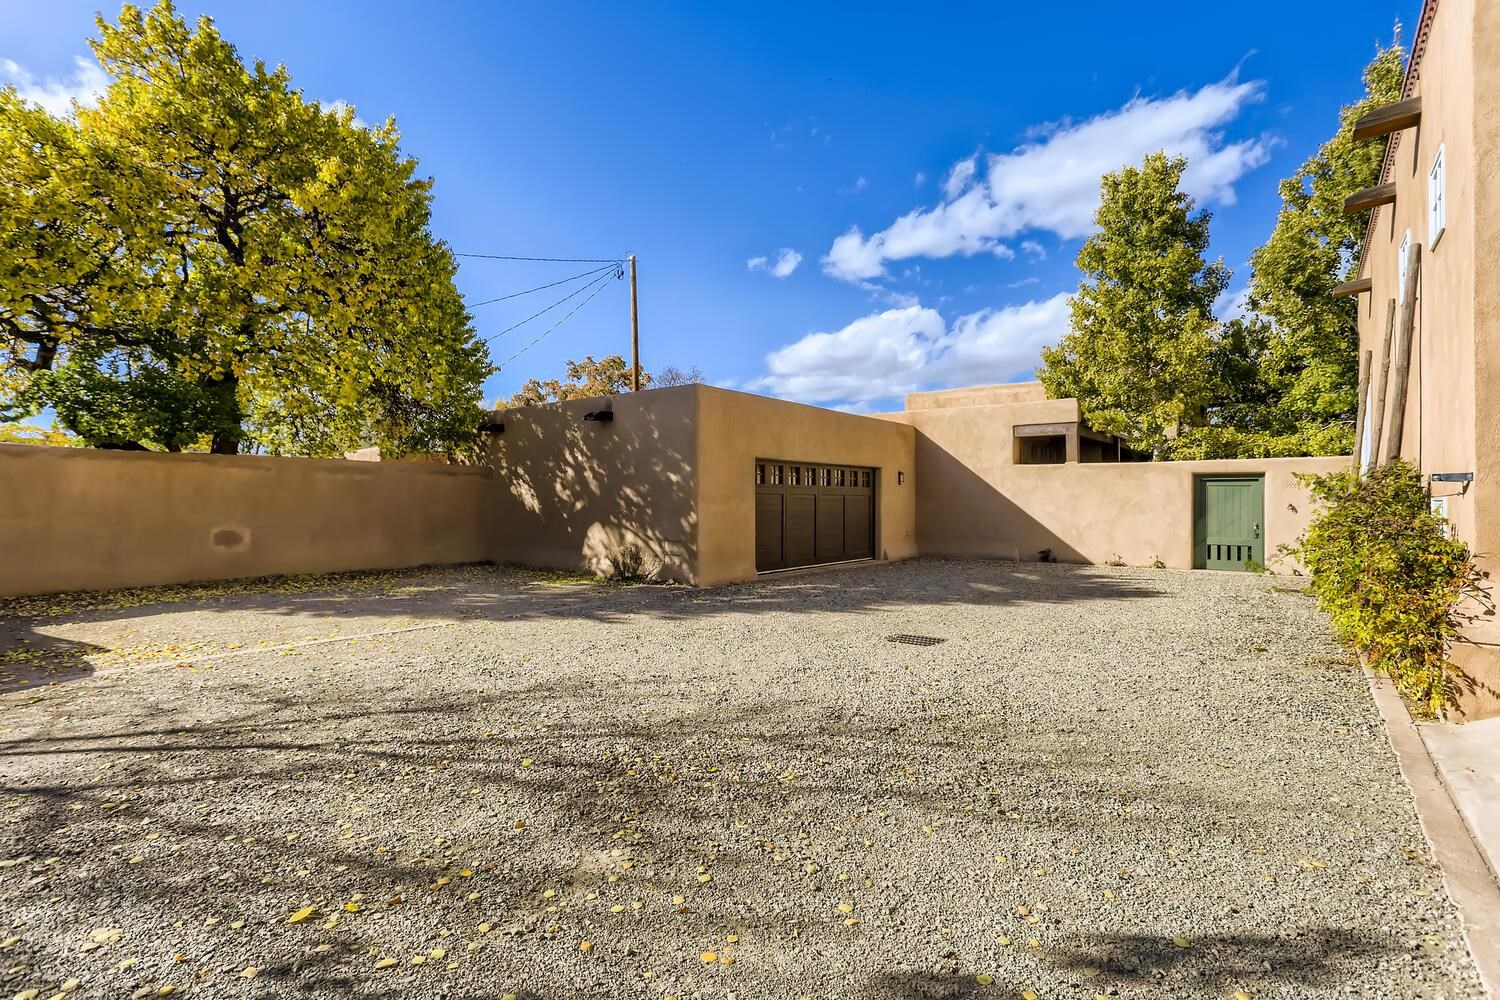 992 Old Pecos unit 4, Santa Fe, New Mexico 87505, 4 Bedrooms Bedrooms, ,4 BathroomsBathrooms,Residential,For Sale,992 Old Pecos unit 4,202105456